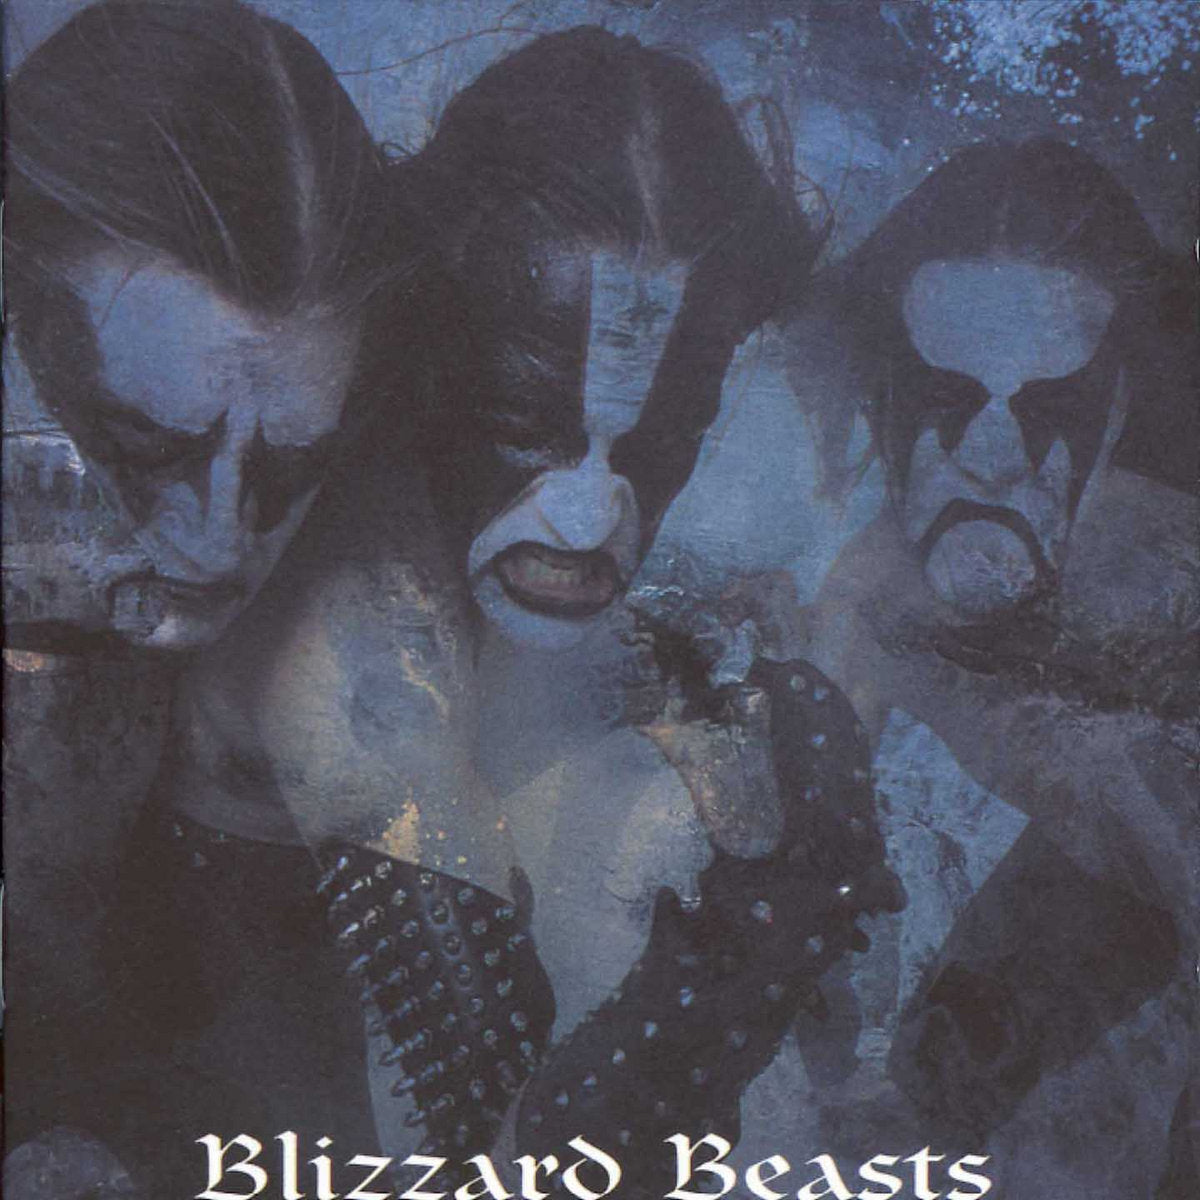 [SOLD OUT] IMMORTAL "Blizzard Beasts" vinyl LP (gatefold)